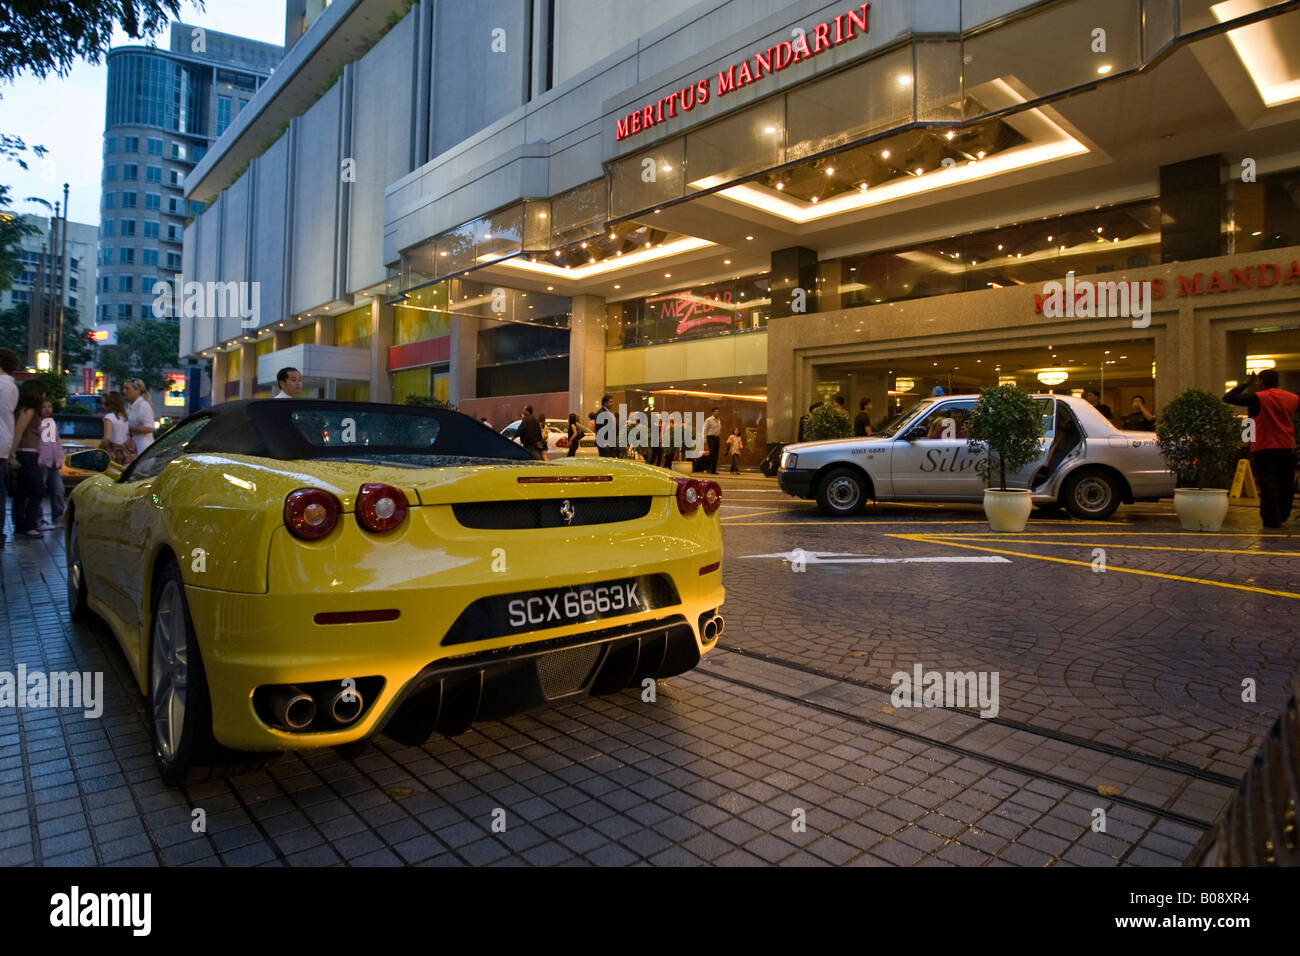 Gelben Ferrari parkte vor dem Meritus Mandarin Hotel, Orchard Road, Singapur, Südostasien Stockfoto